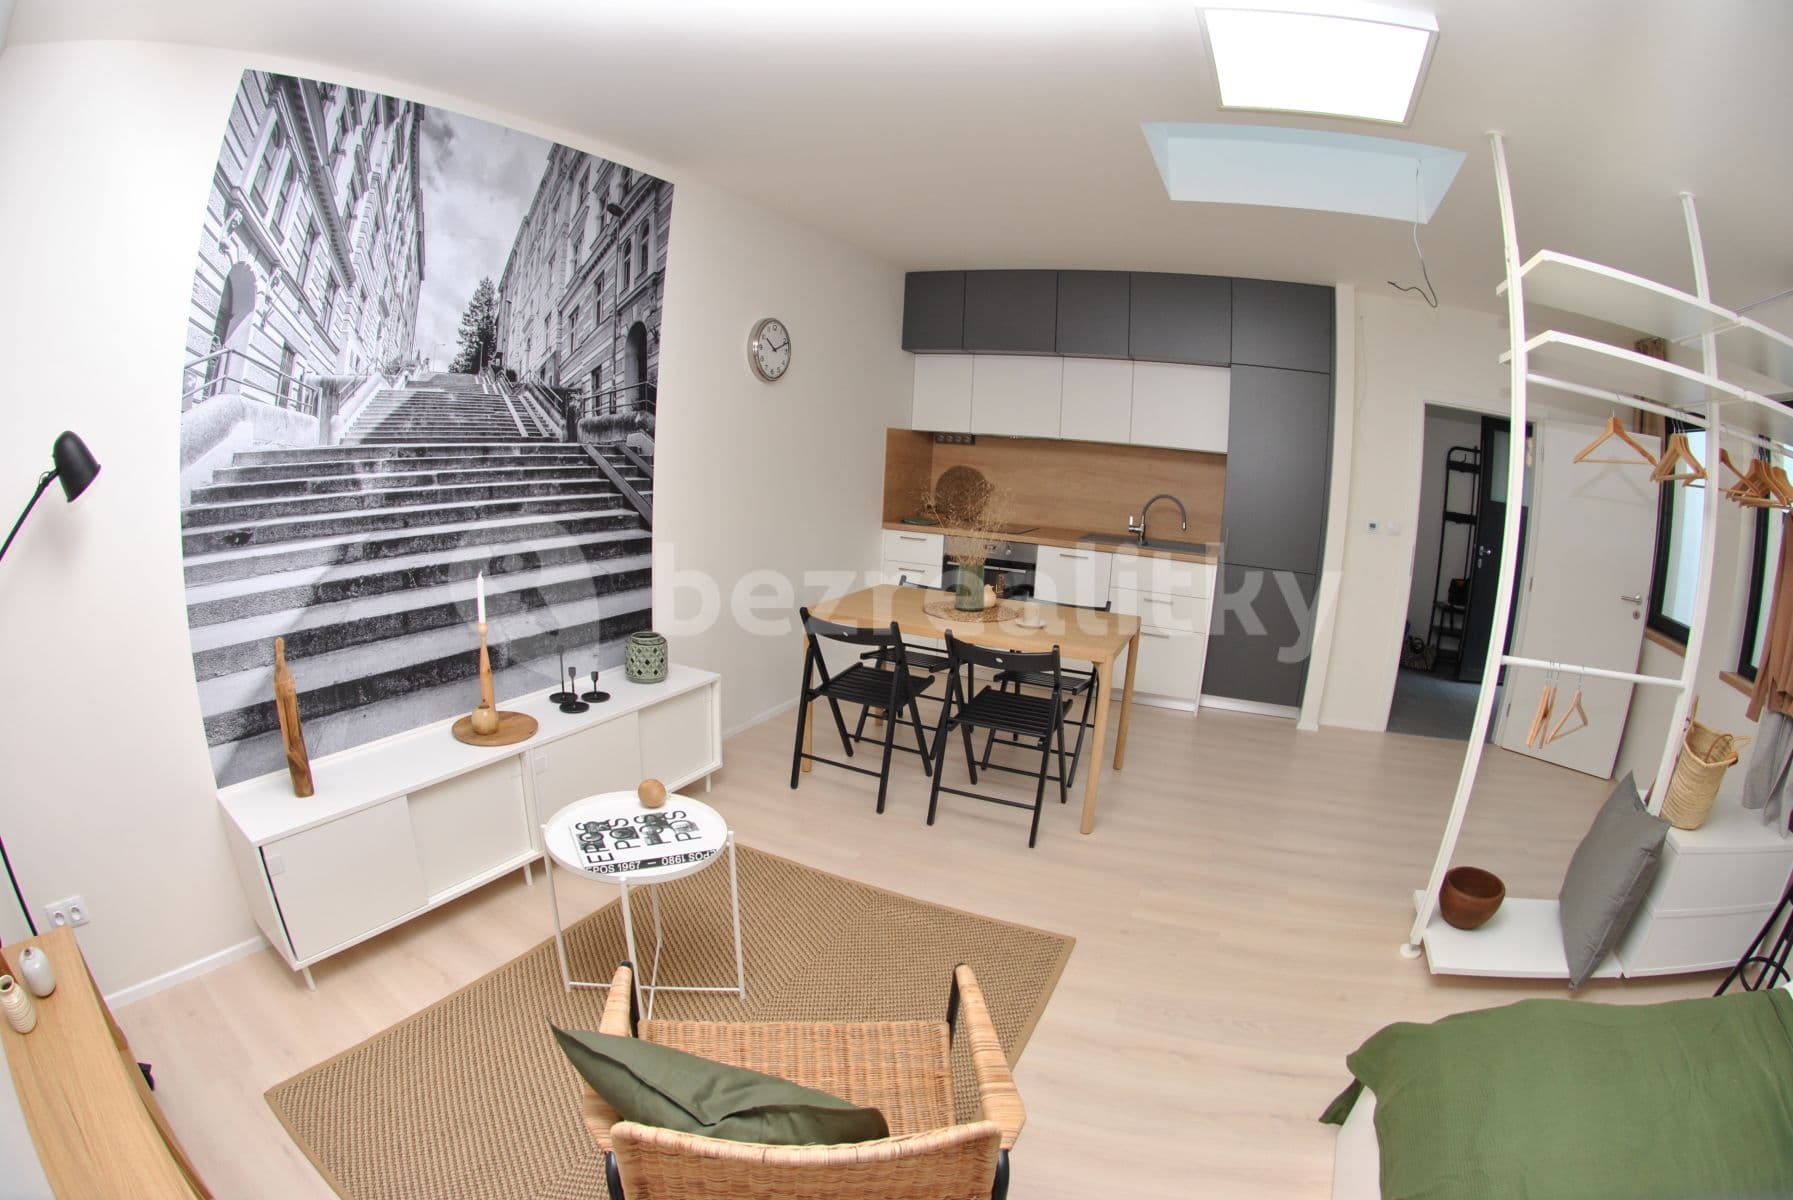 Studio flat to rent, 35 m², Jeronýmova, Brno, Jihomoravský Region